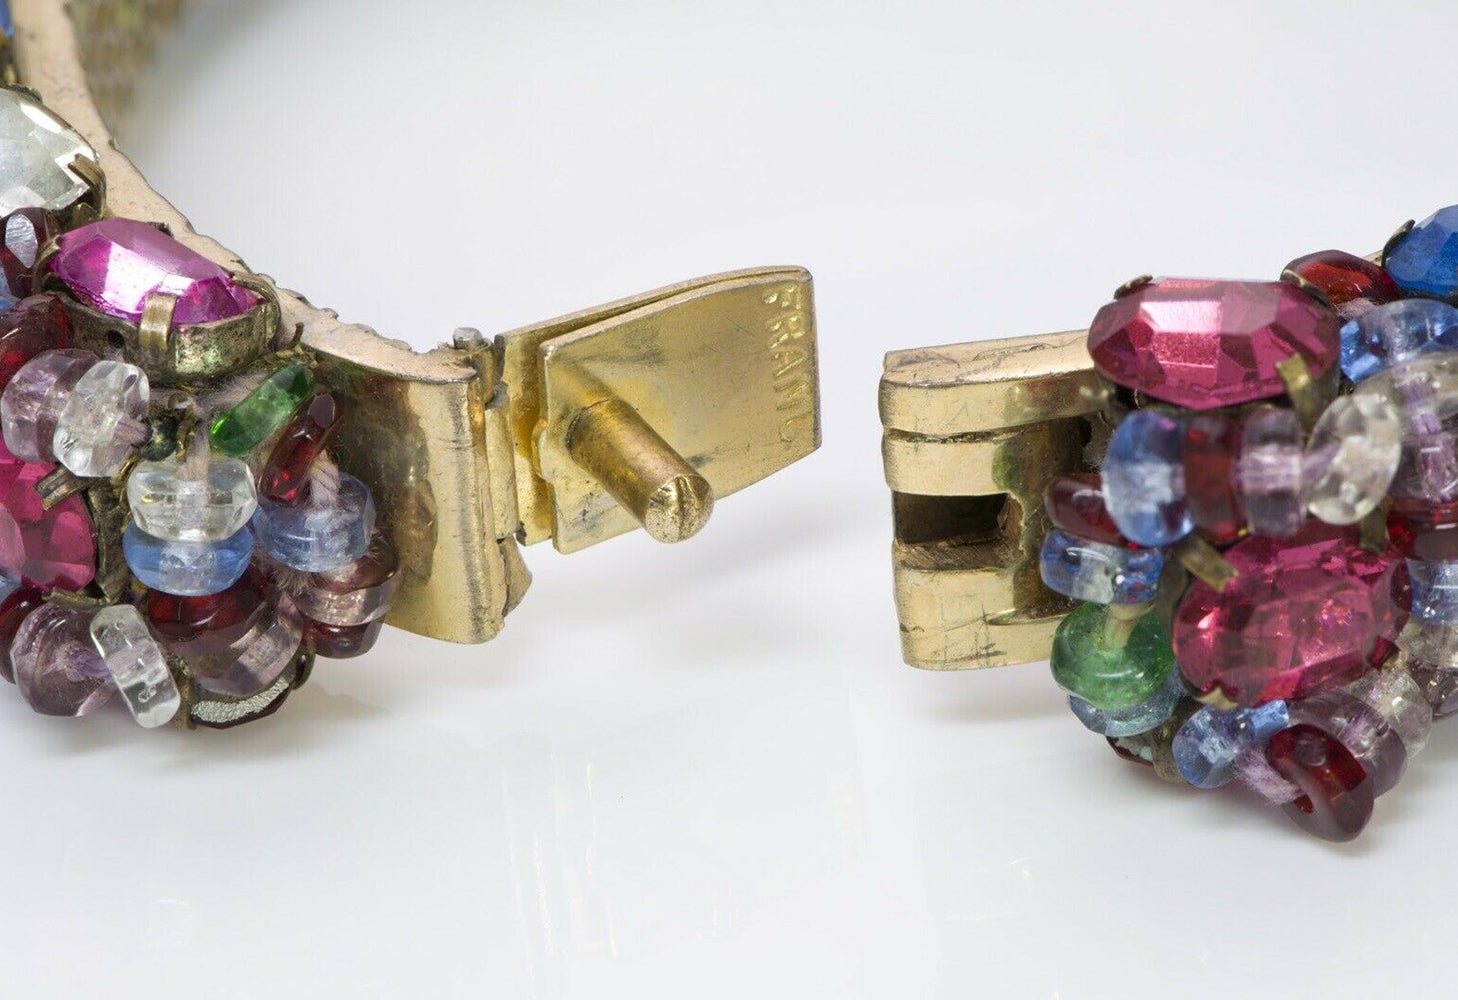 Roger Jean-Pierre Paris 1930’s Blue Pink Crystal Beaded Bangle Bracelet